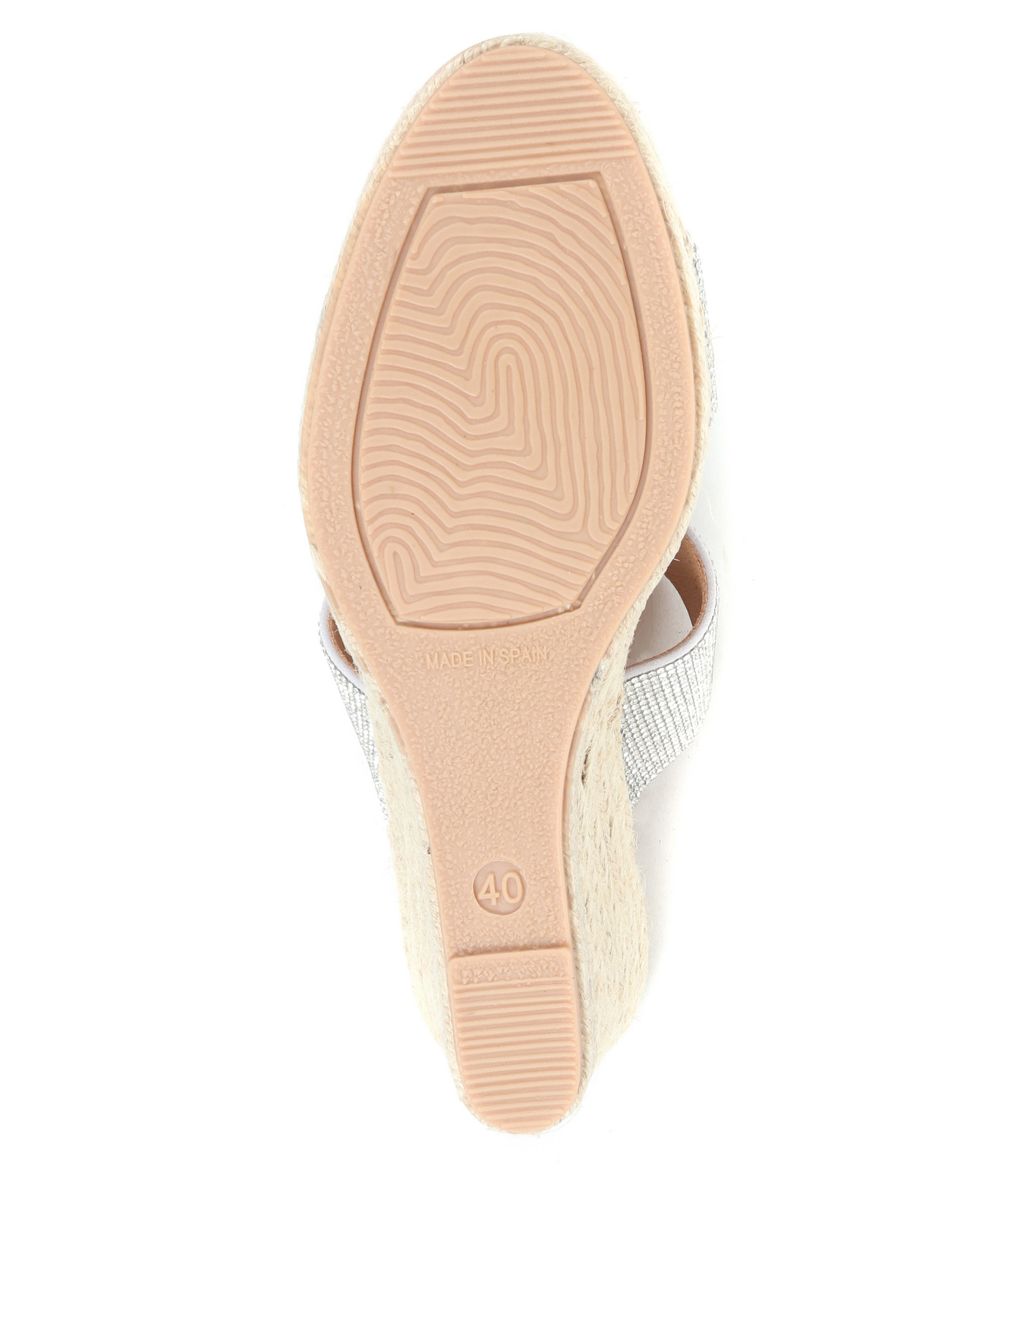 Leather Wedge Heel Espadrille Sandals image 5